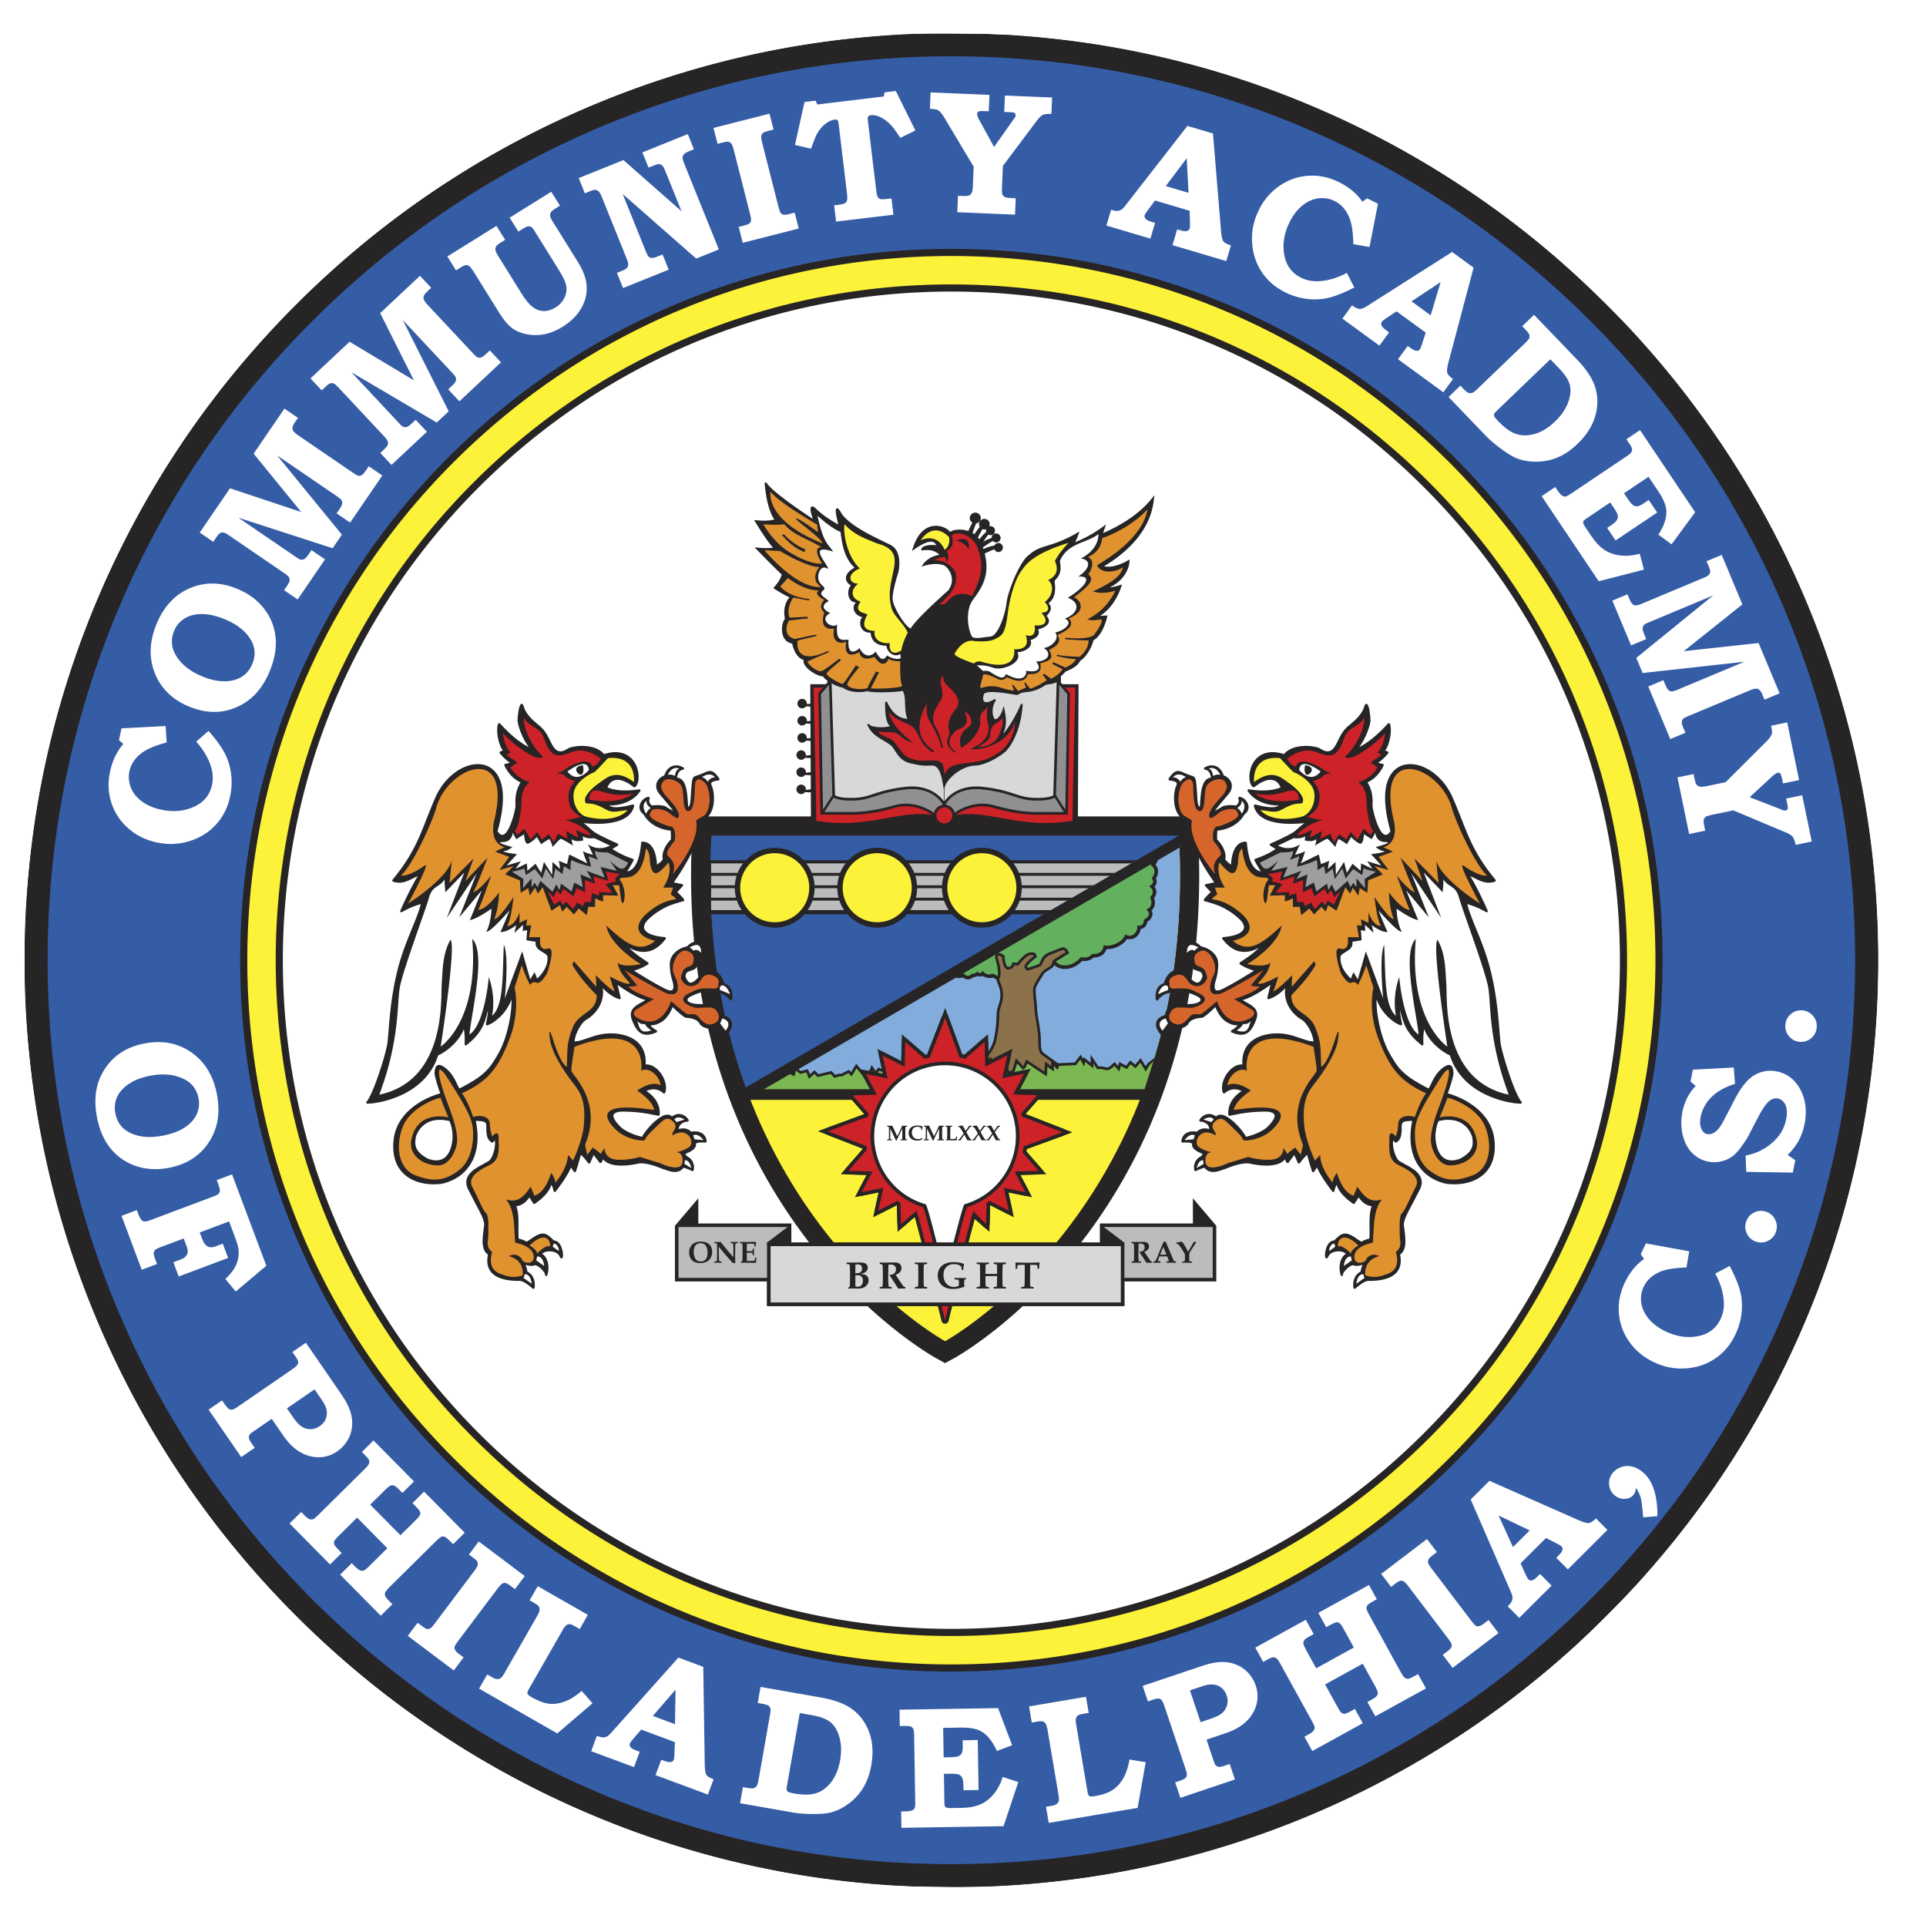 Community Academy of Philadelphia